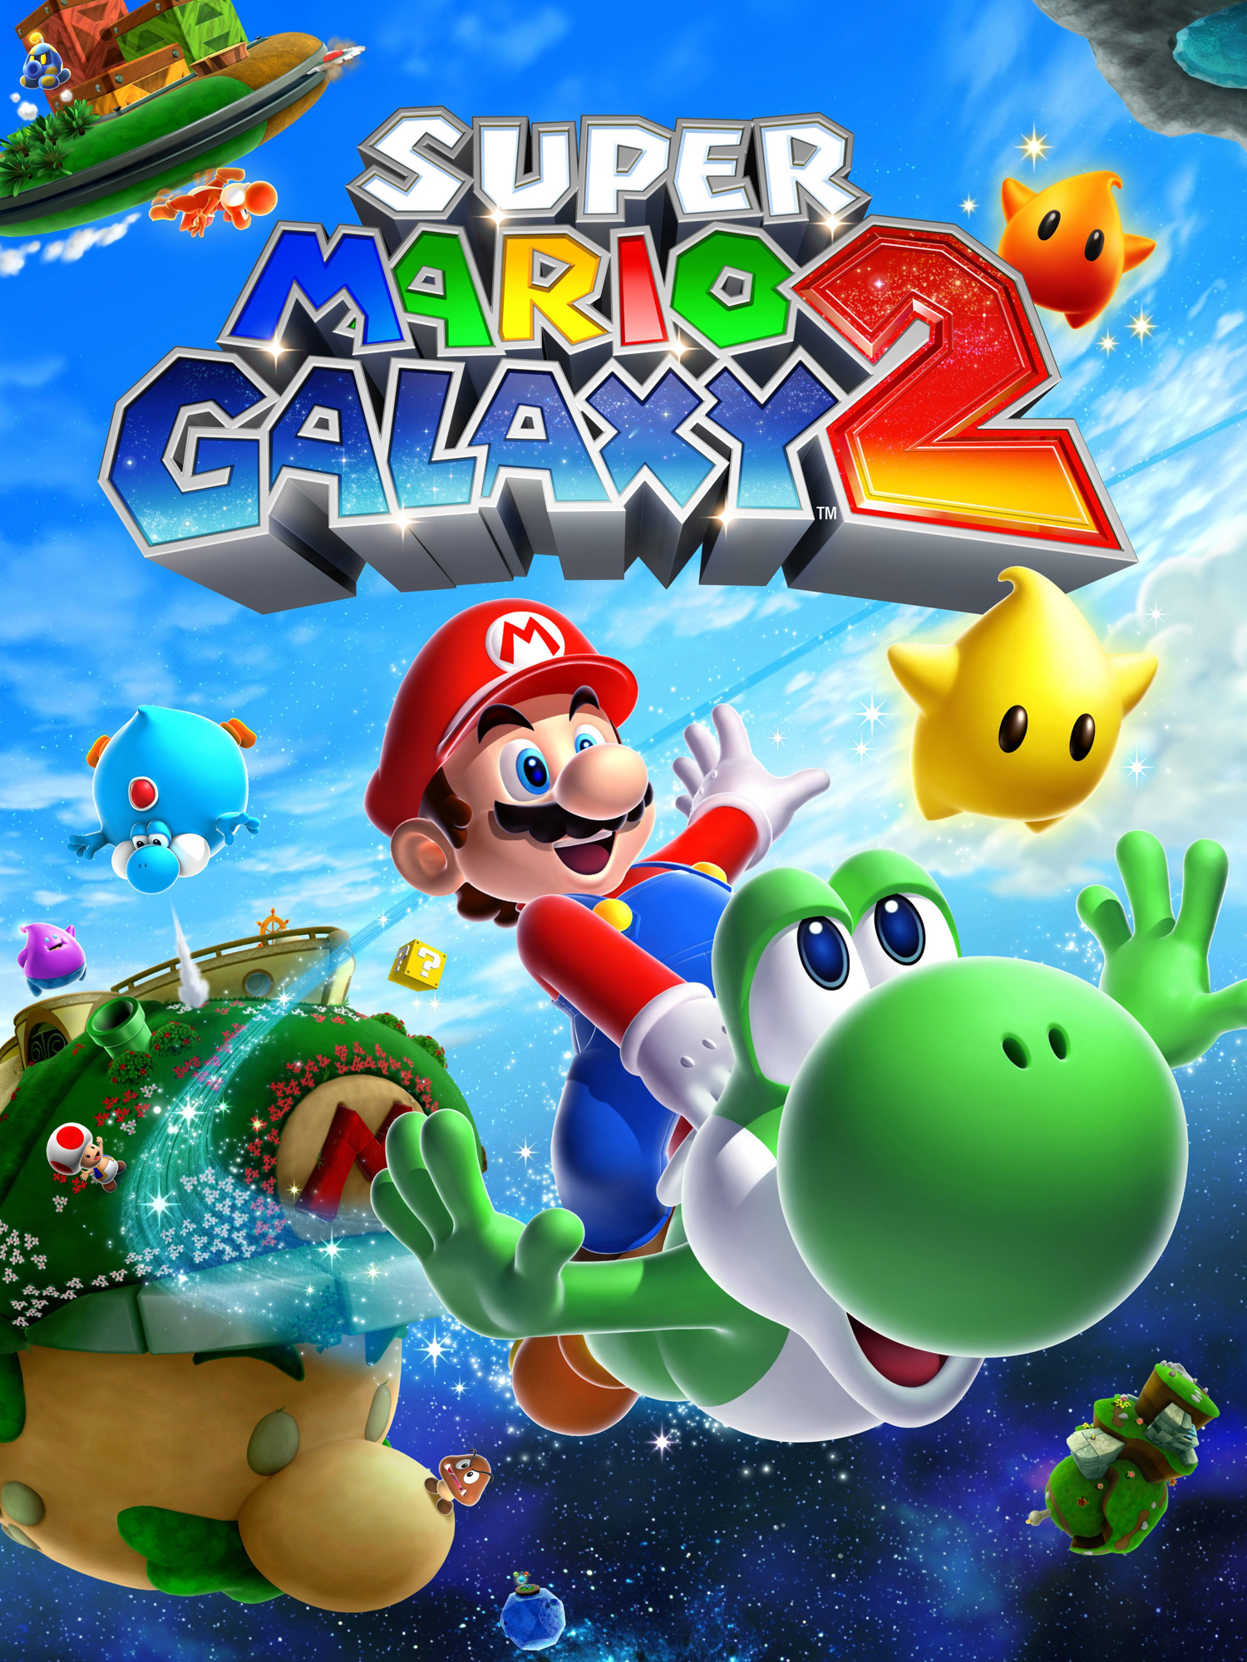 Super Mario Galaxy 2 cover